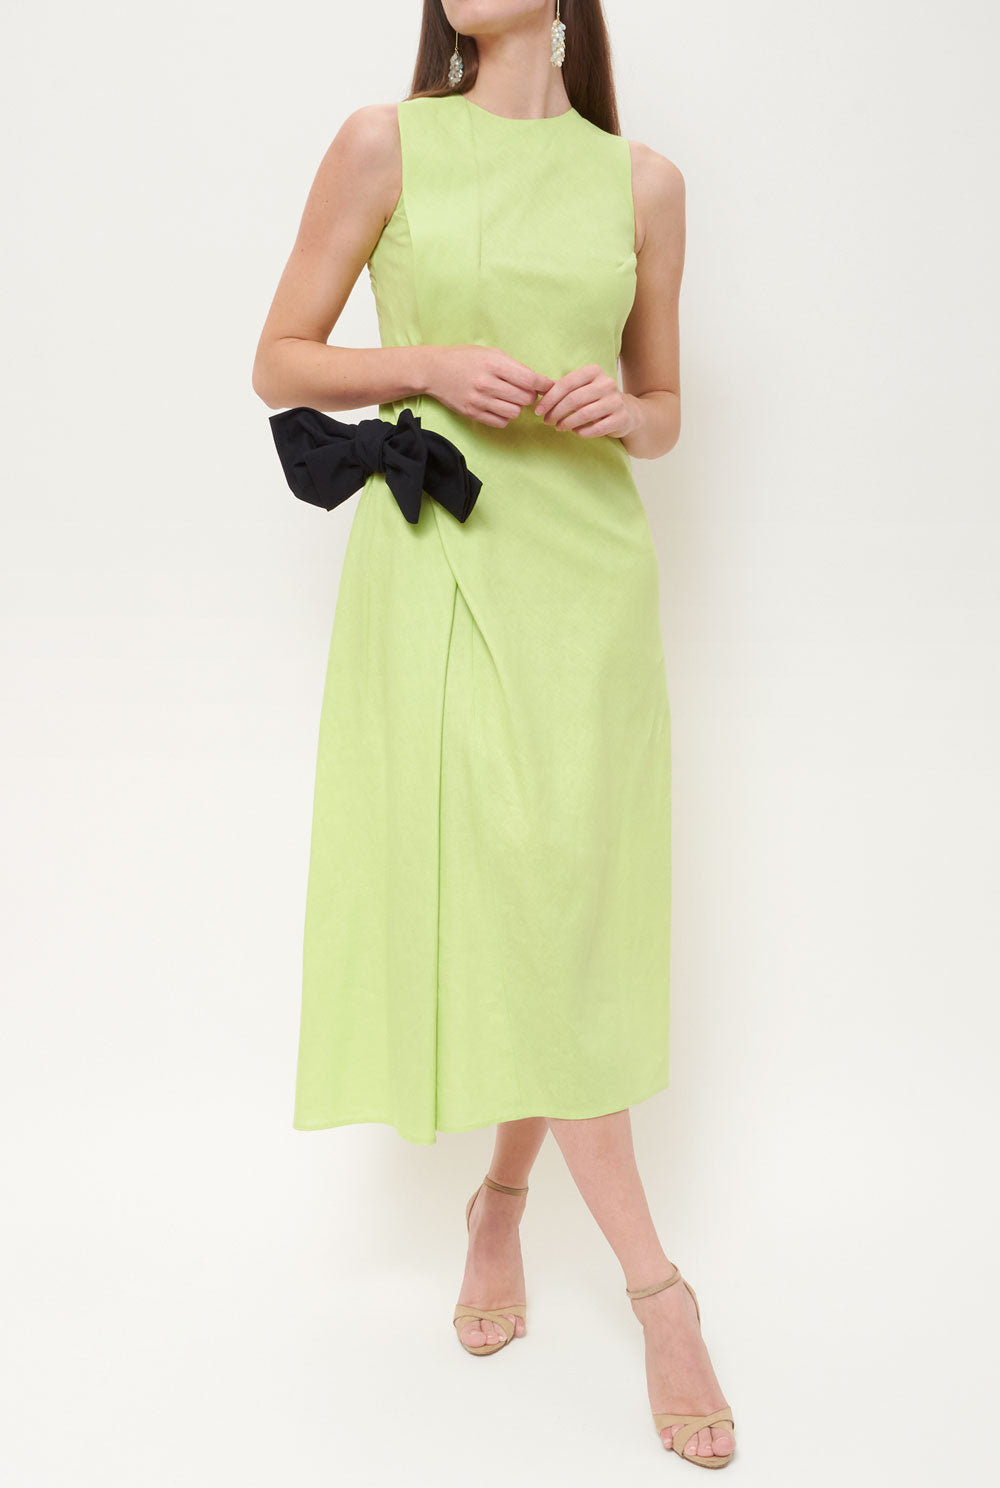 Vestido semientallado lazo Green - Made to order dress Devota & Lomba 